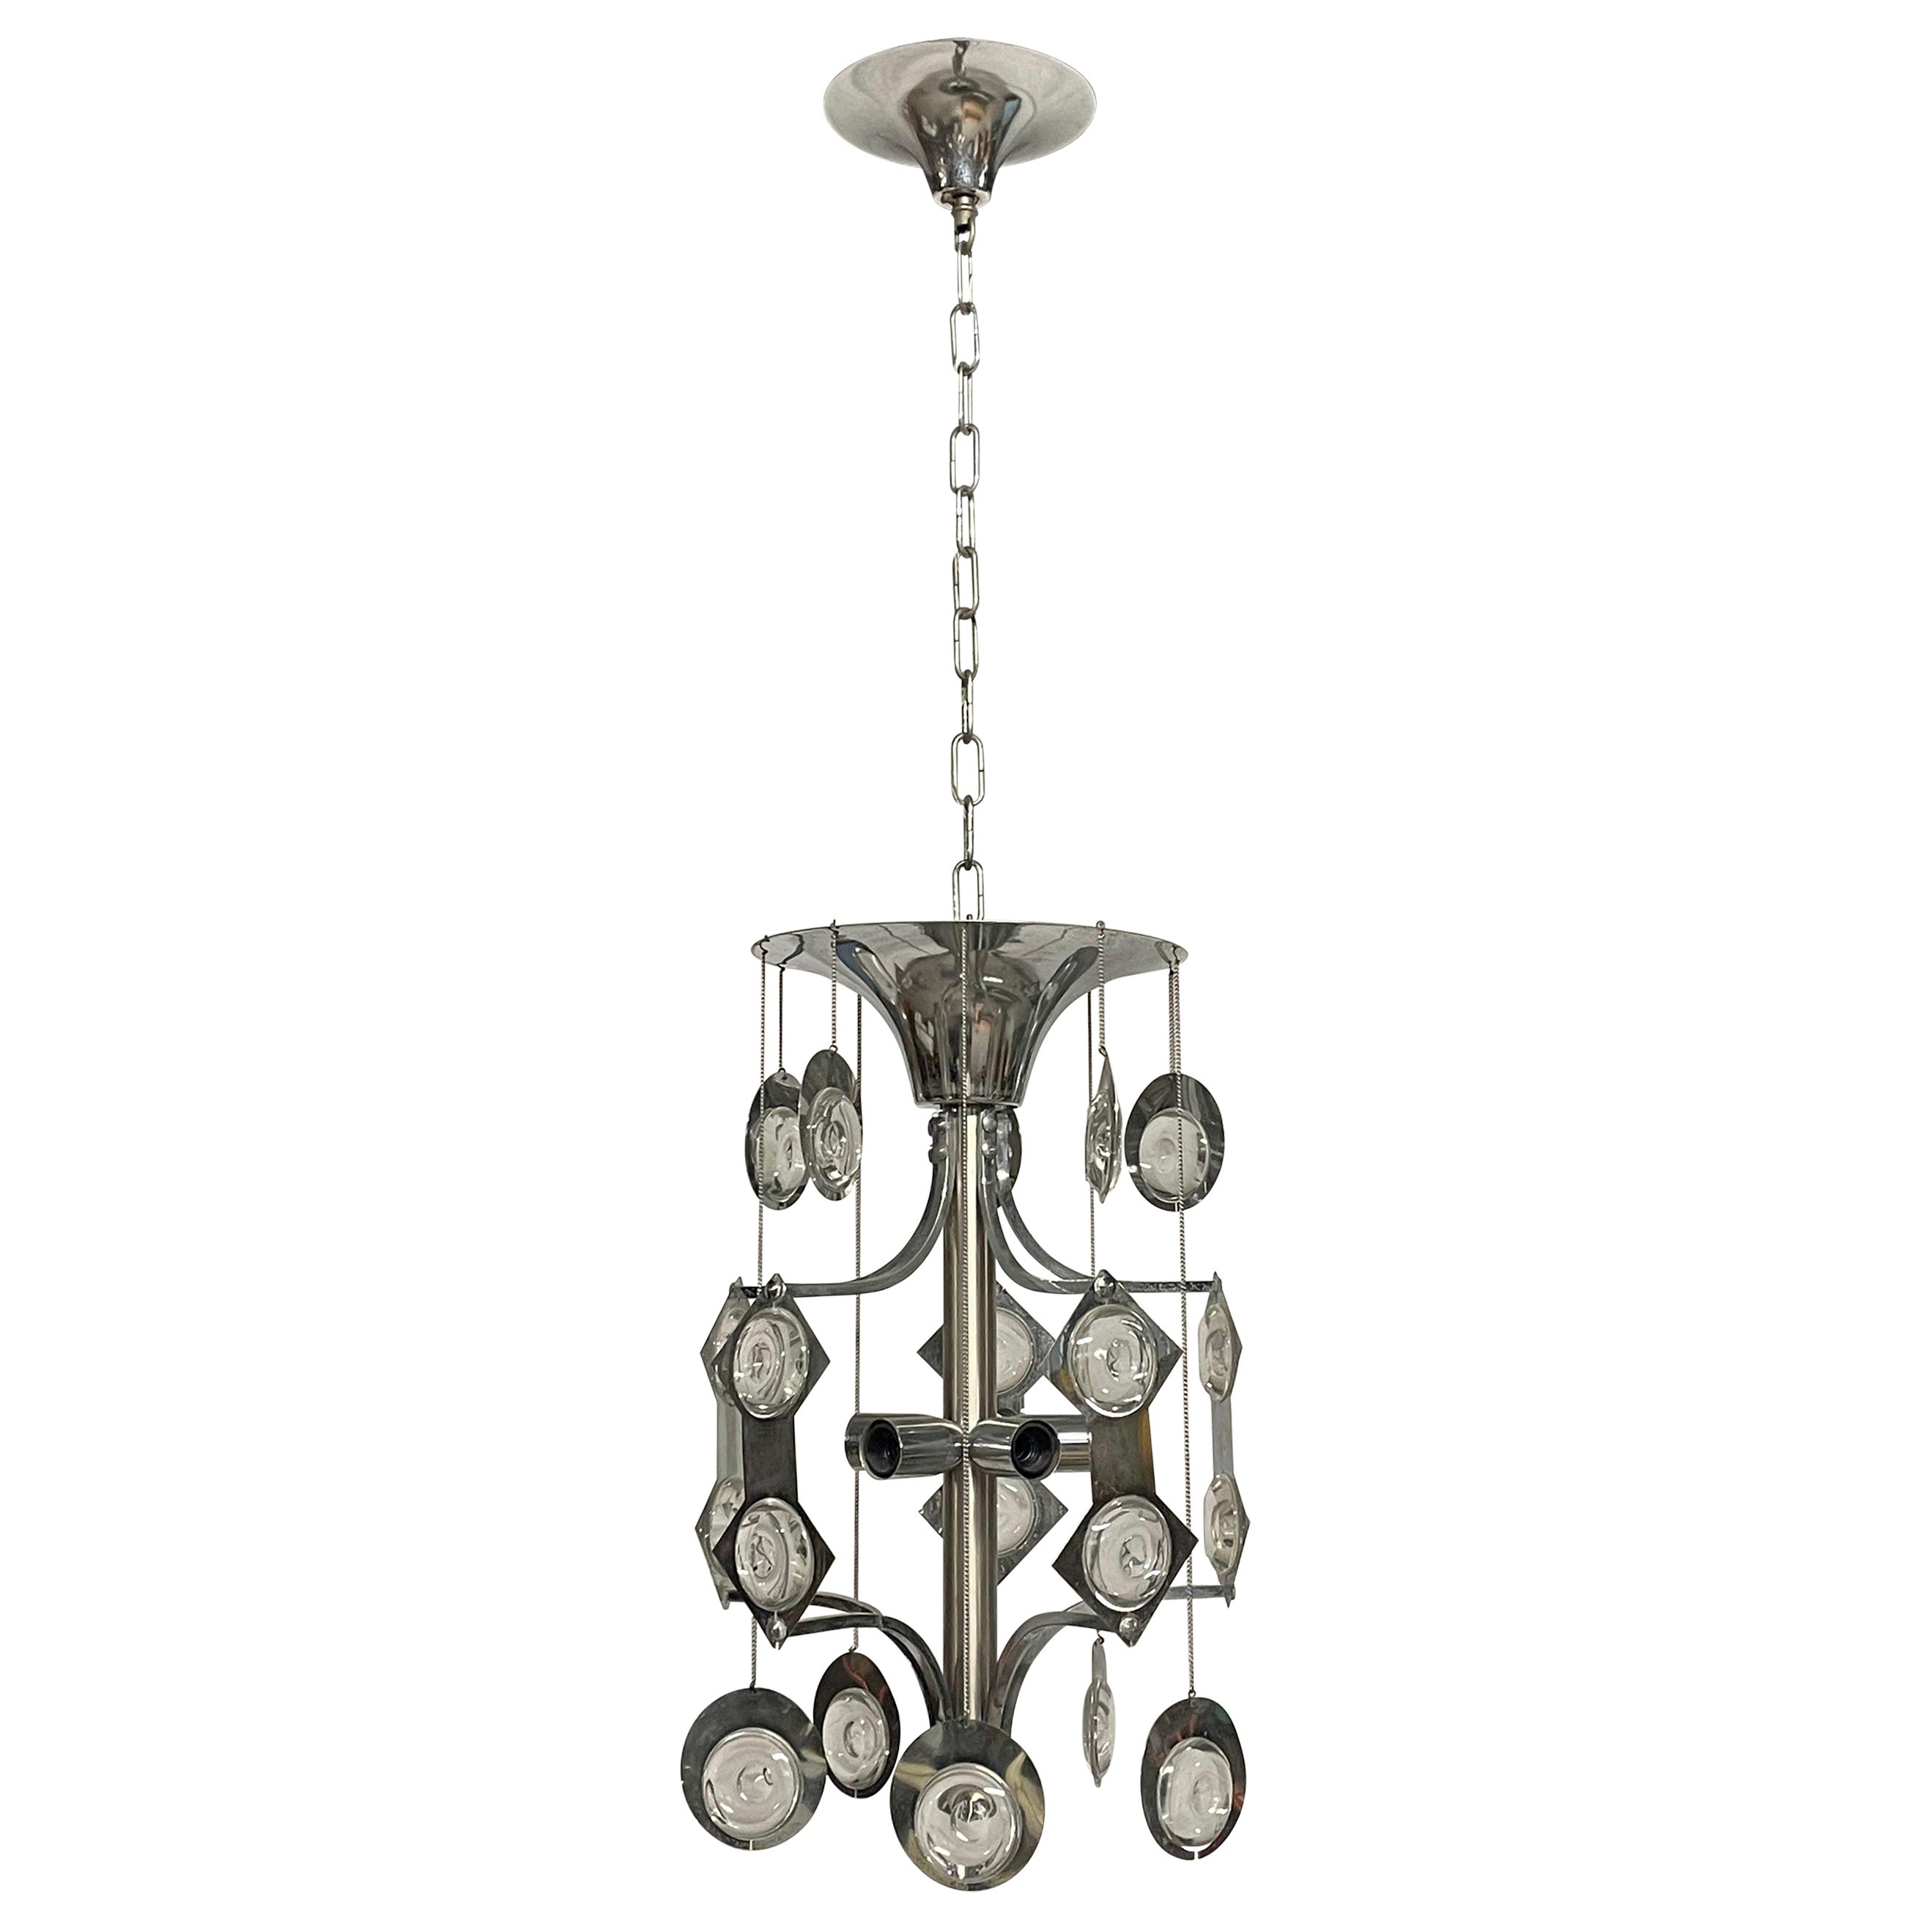 1970s chandelier by Oscar Torlasco for Esperia (Italy) For Sale